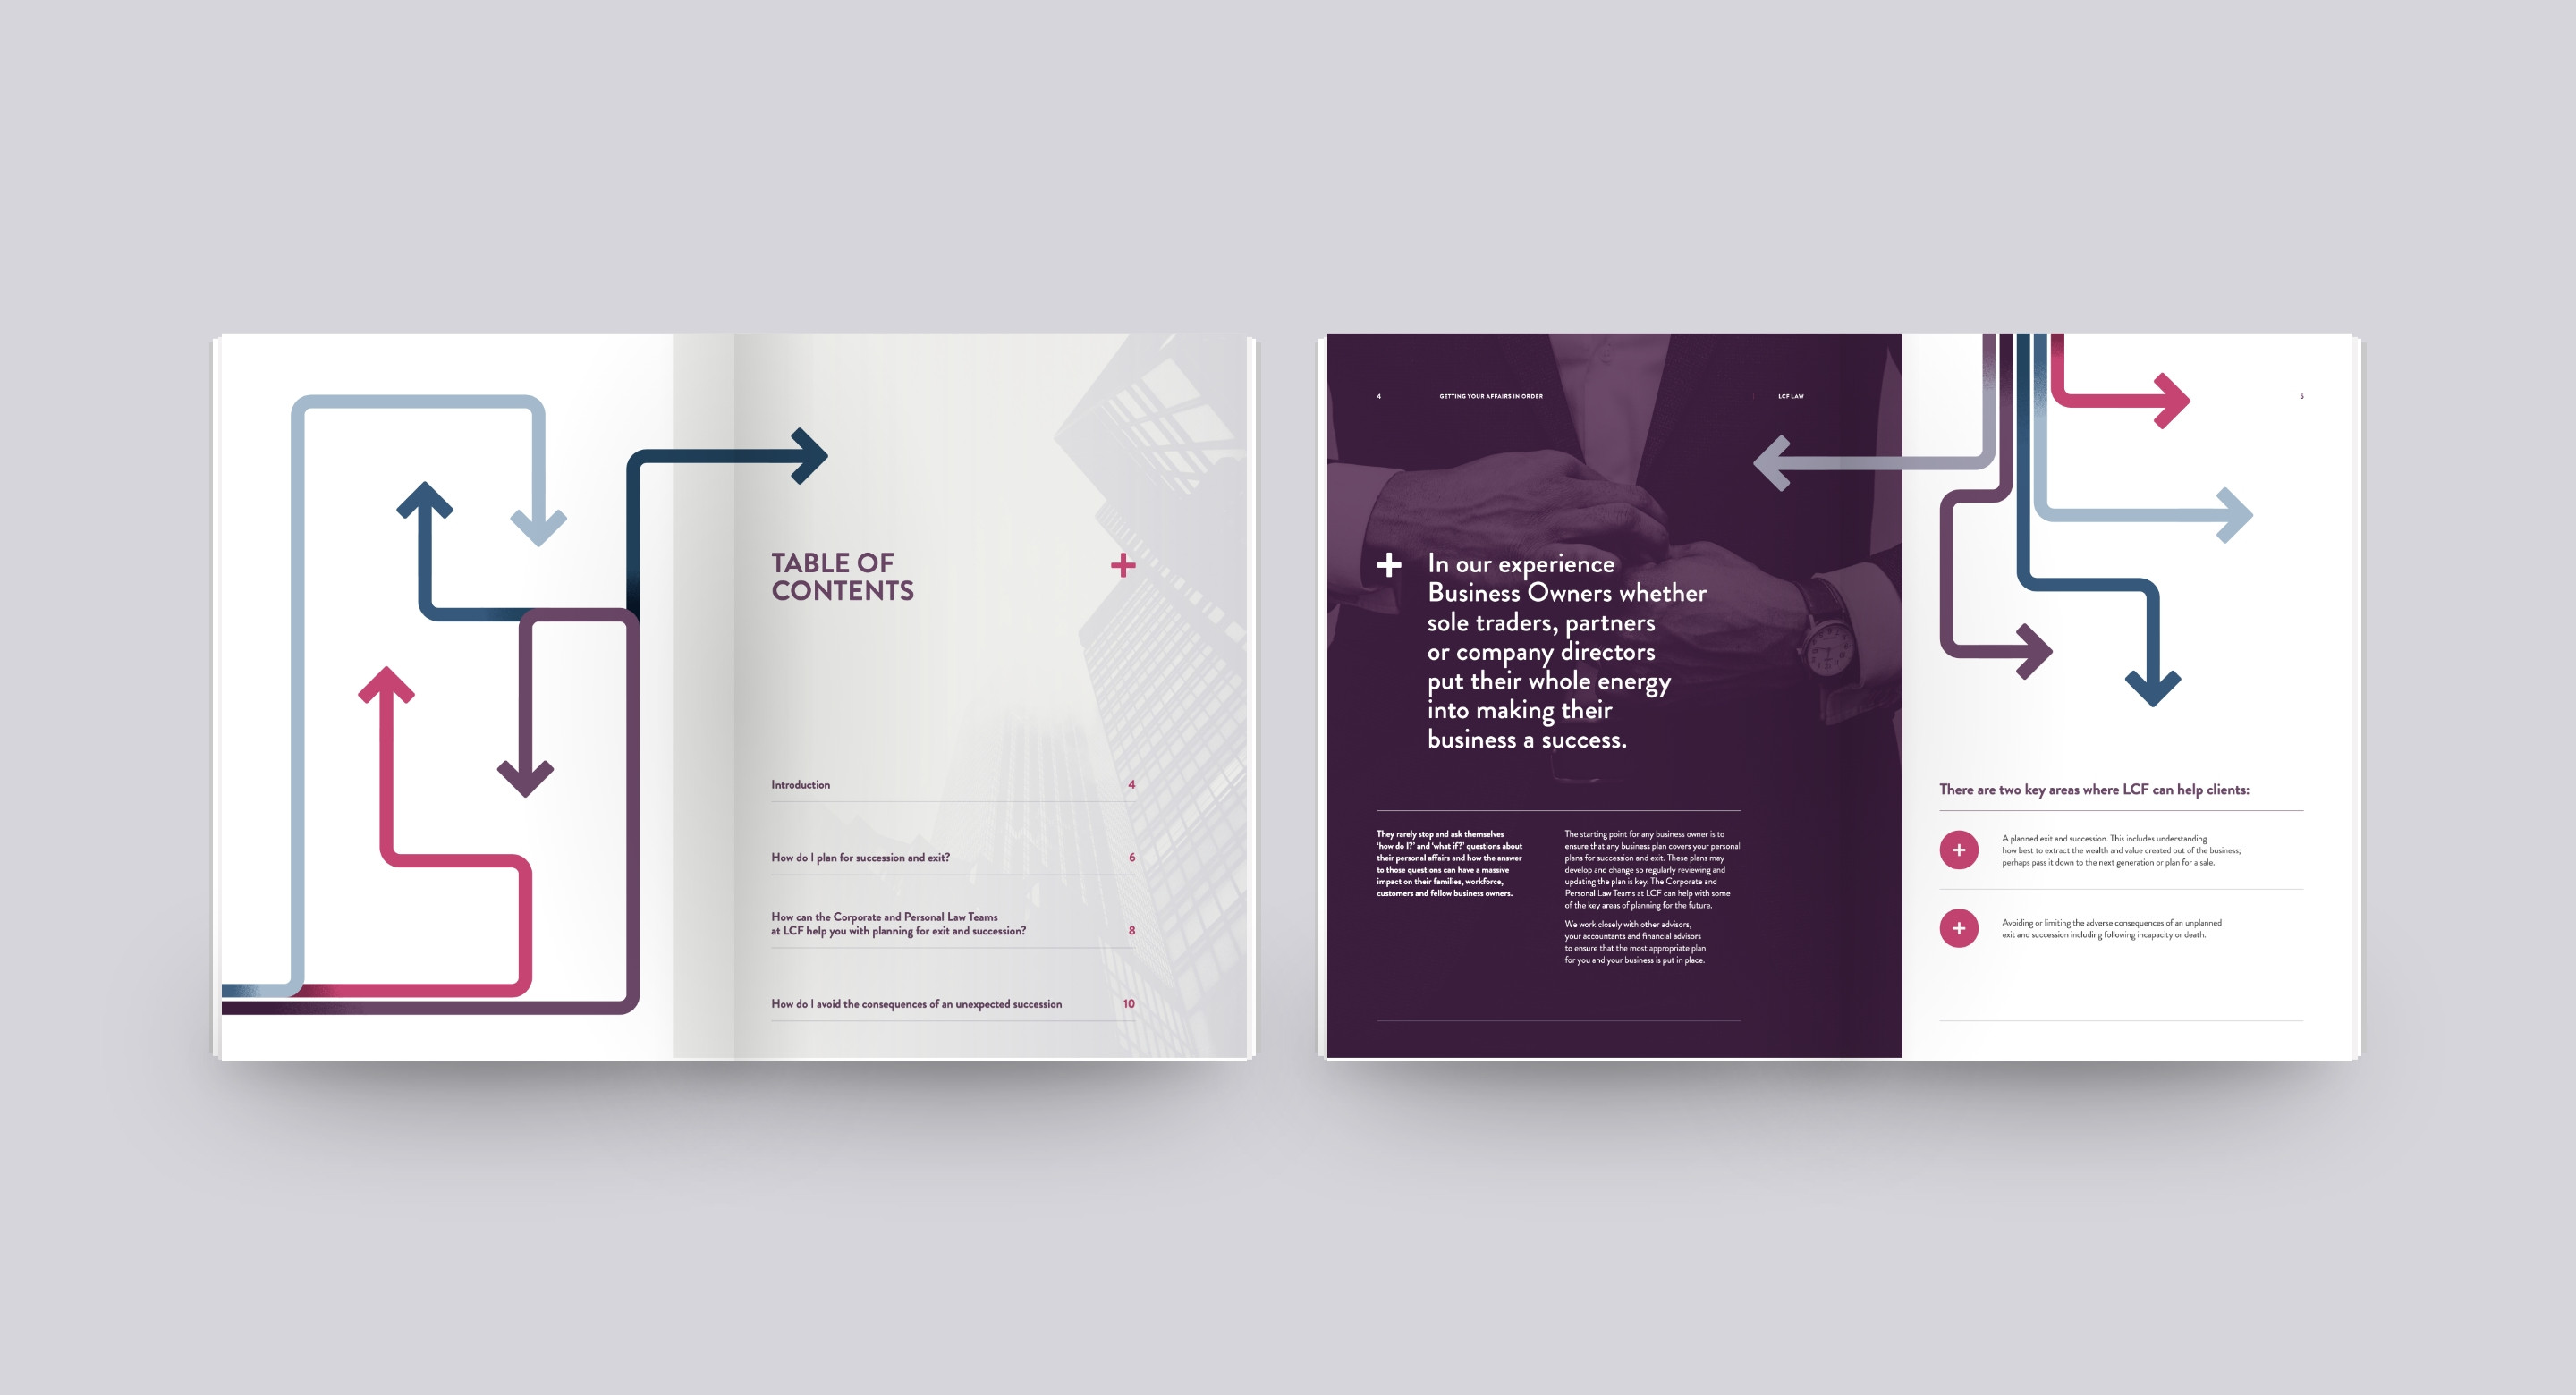 LCF Law brochure design by Root Studio